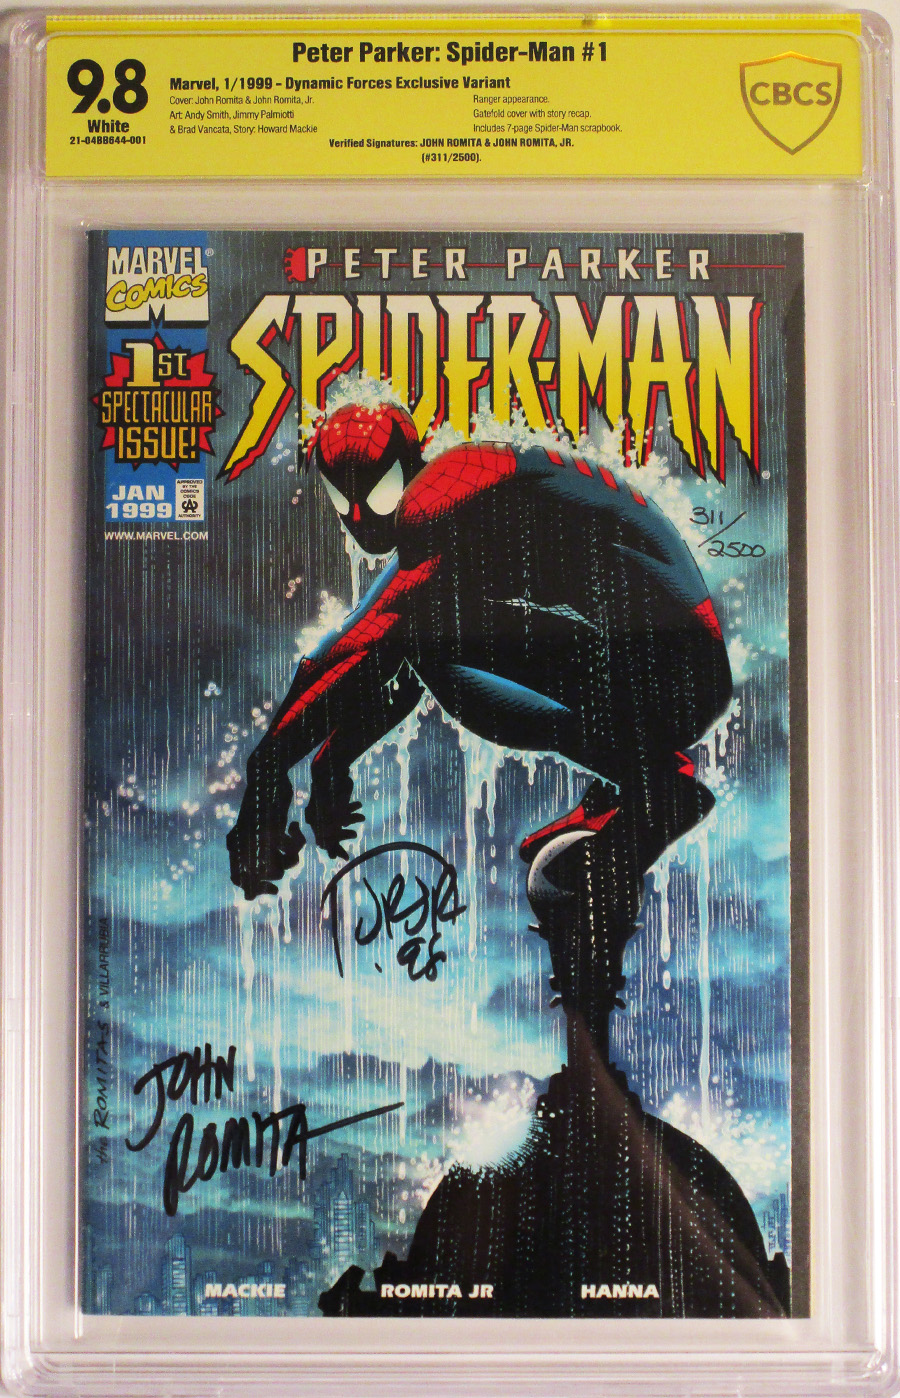 Peter Parker Spider-Man #1 Cover D CBCS 9.8 John Romita Jr John Romita Verified Signature DF Variant Cover